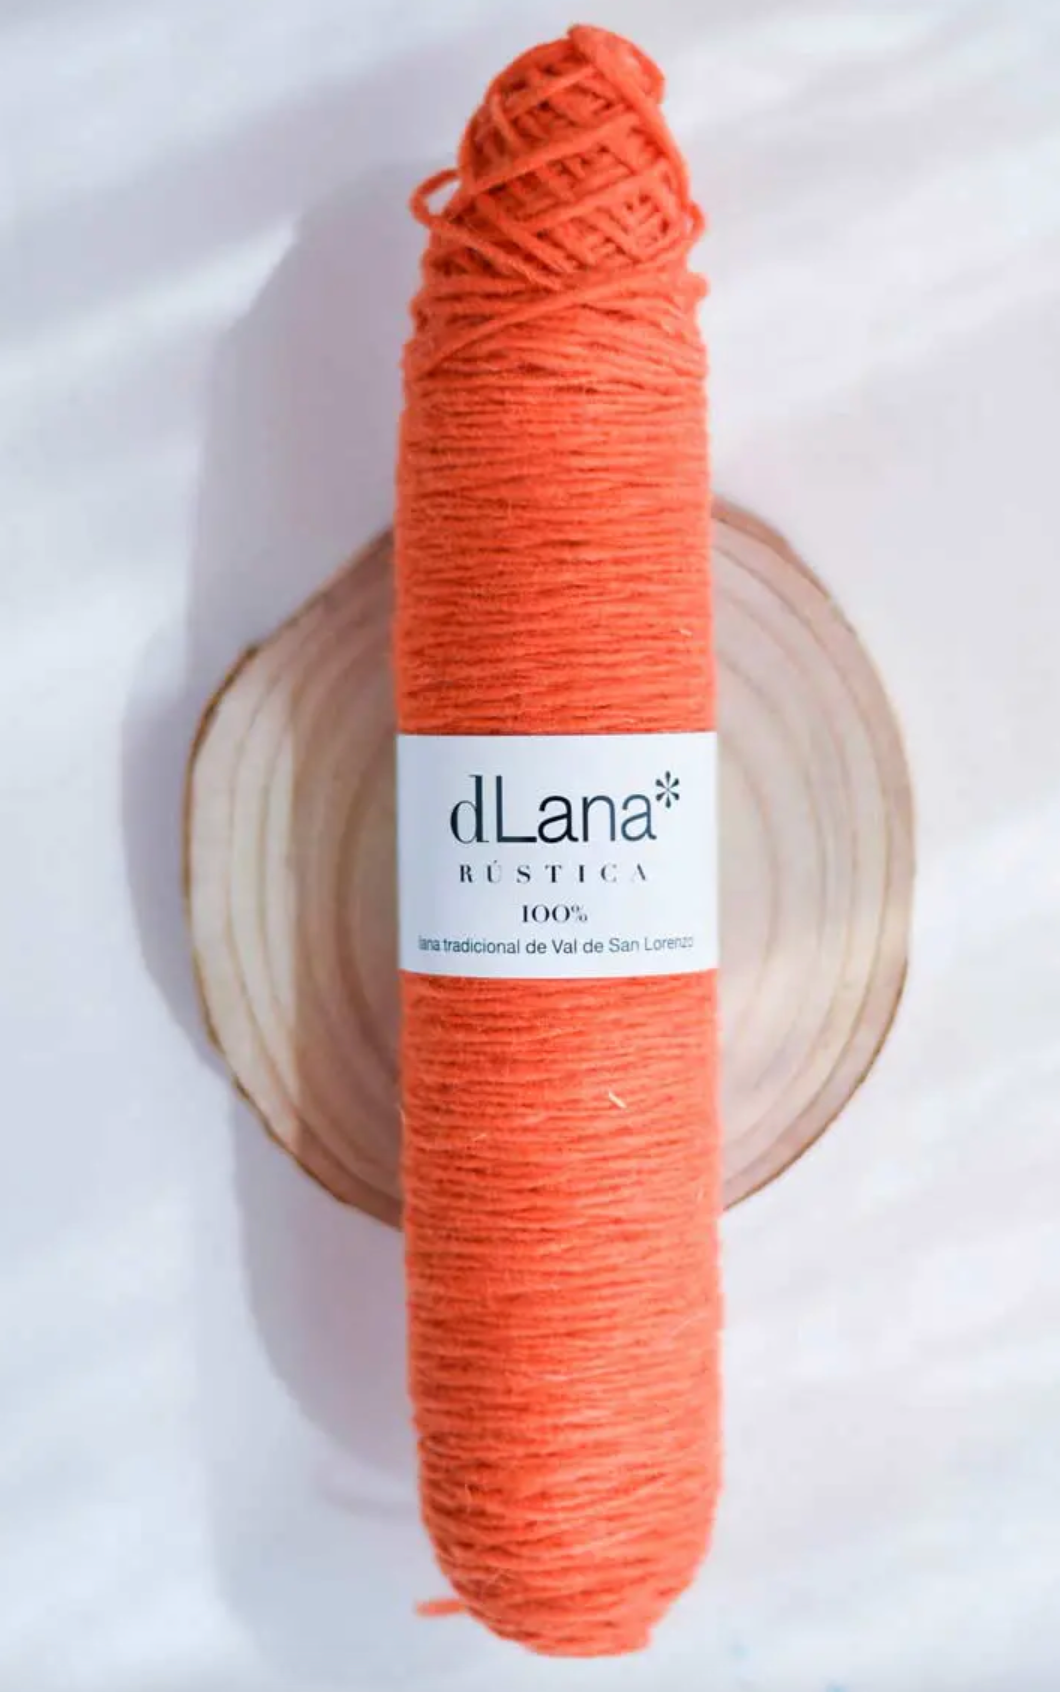 dLana Rustic Wool Yarn - Vivids - The Unusual Pear